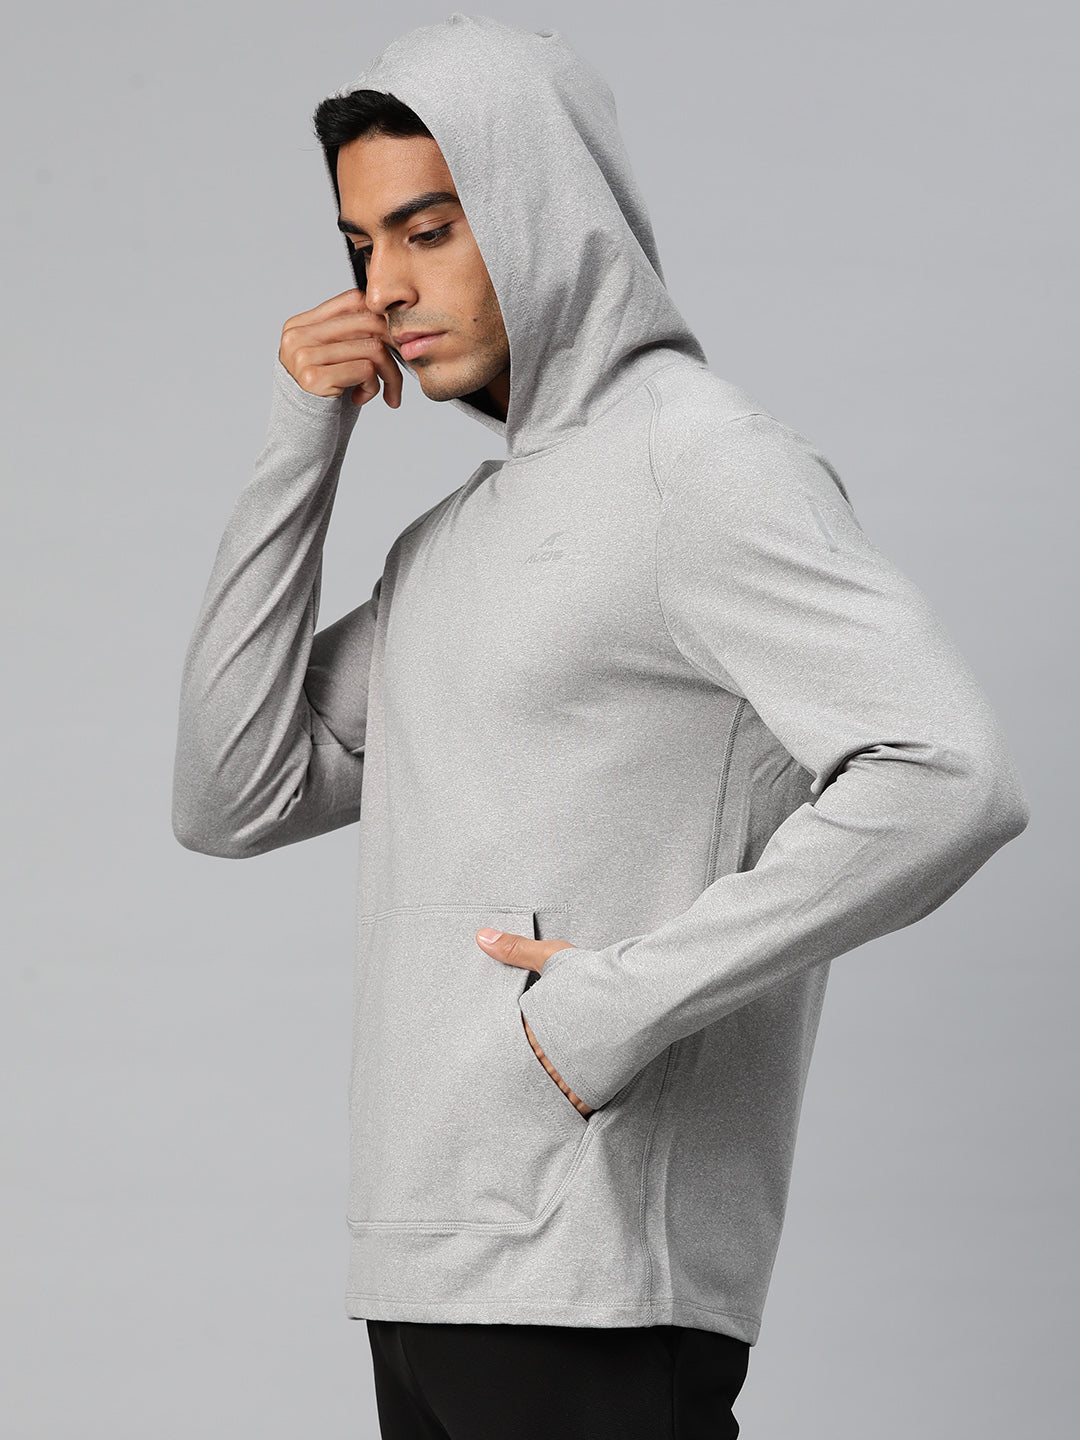 Alcis Men DynamicFit Hooded Sweatshirt